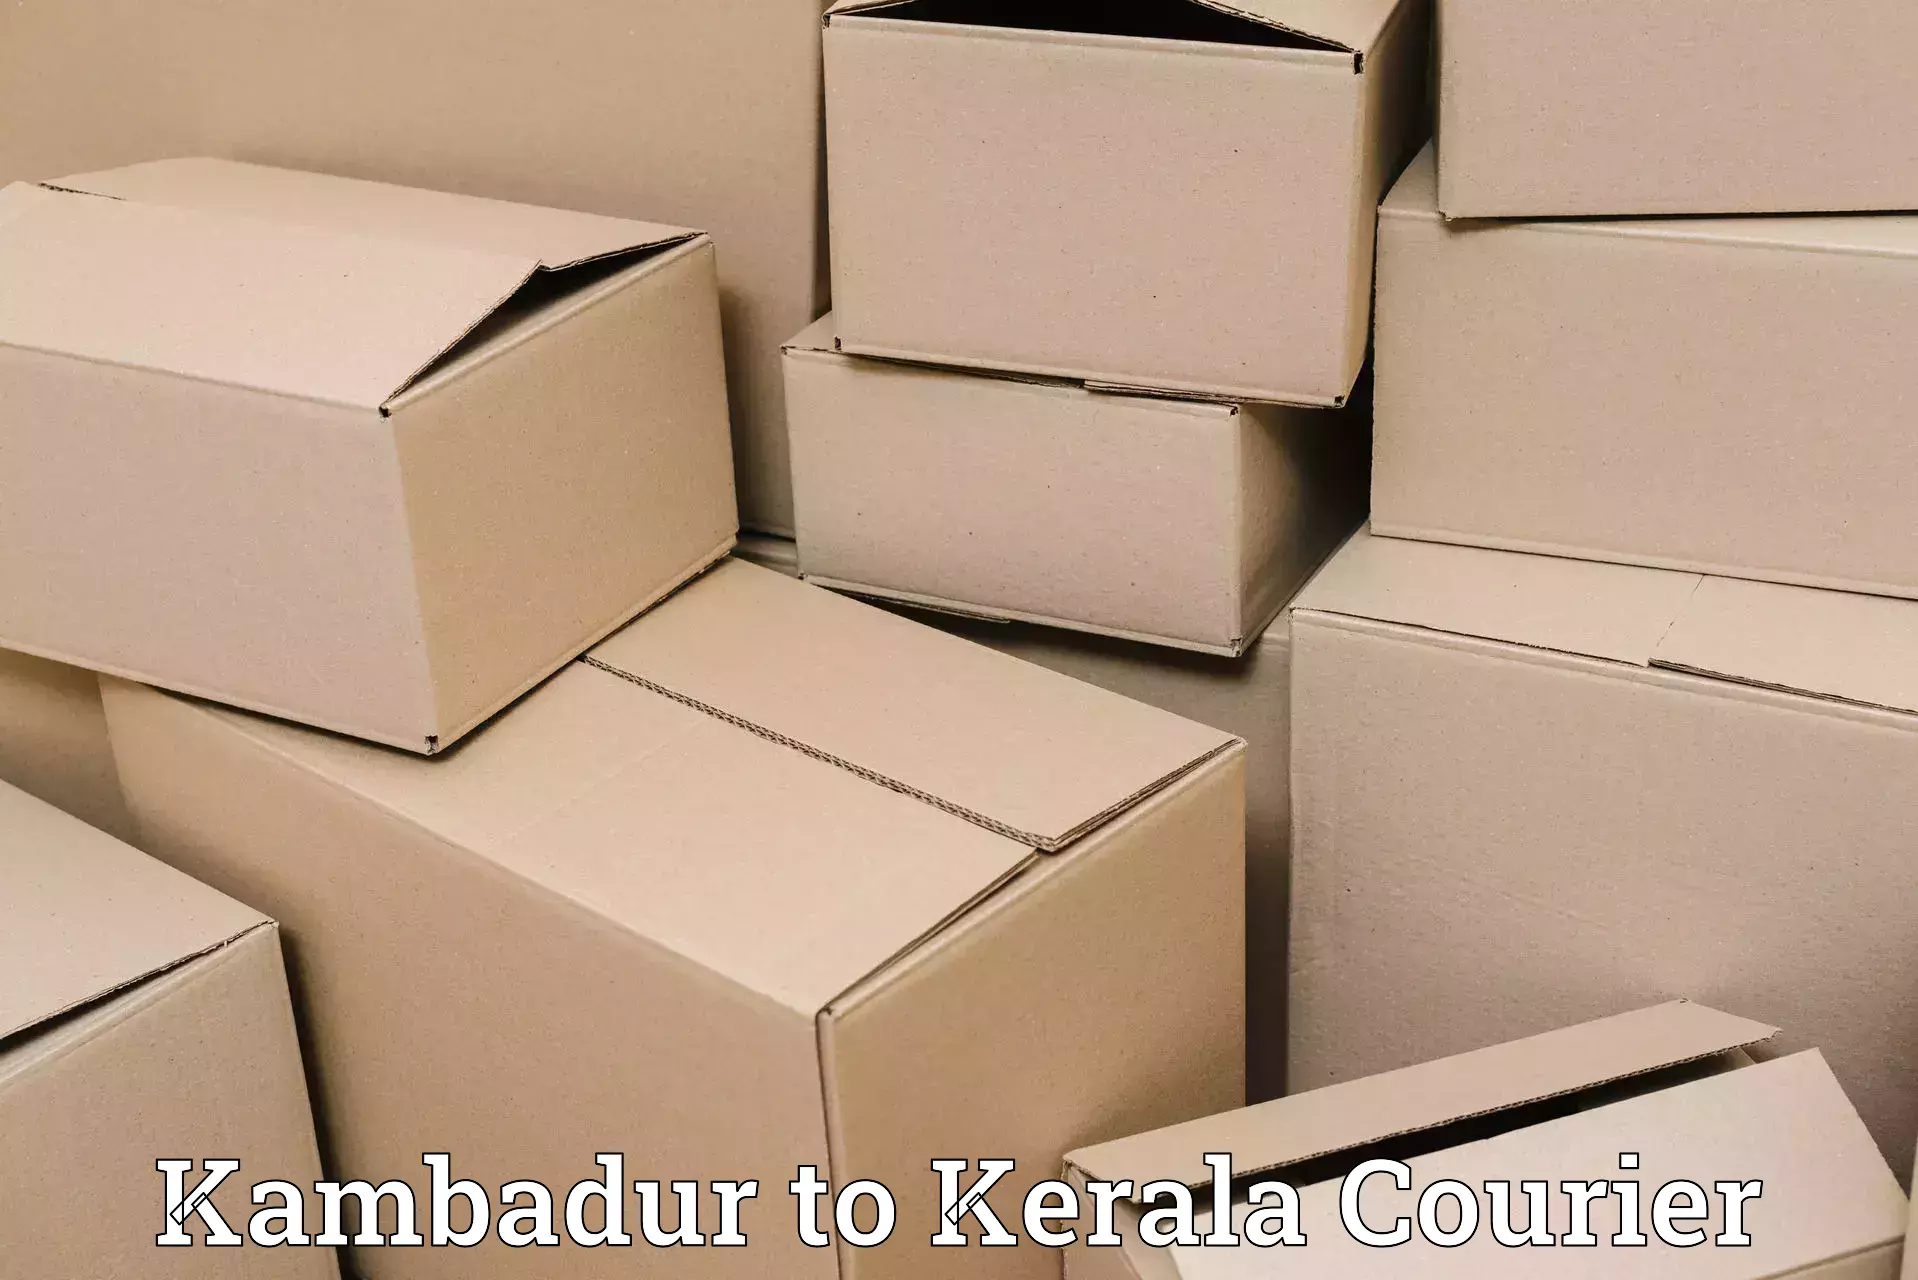 Scheduled delivery in Kambadur to Thiruvananthapuram